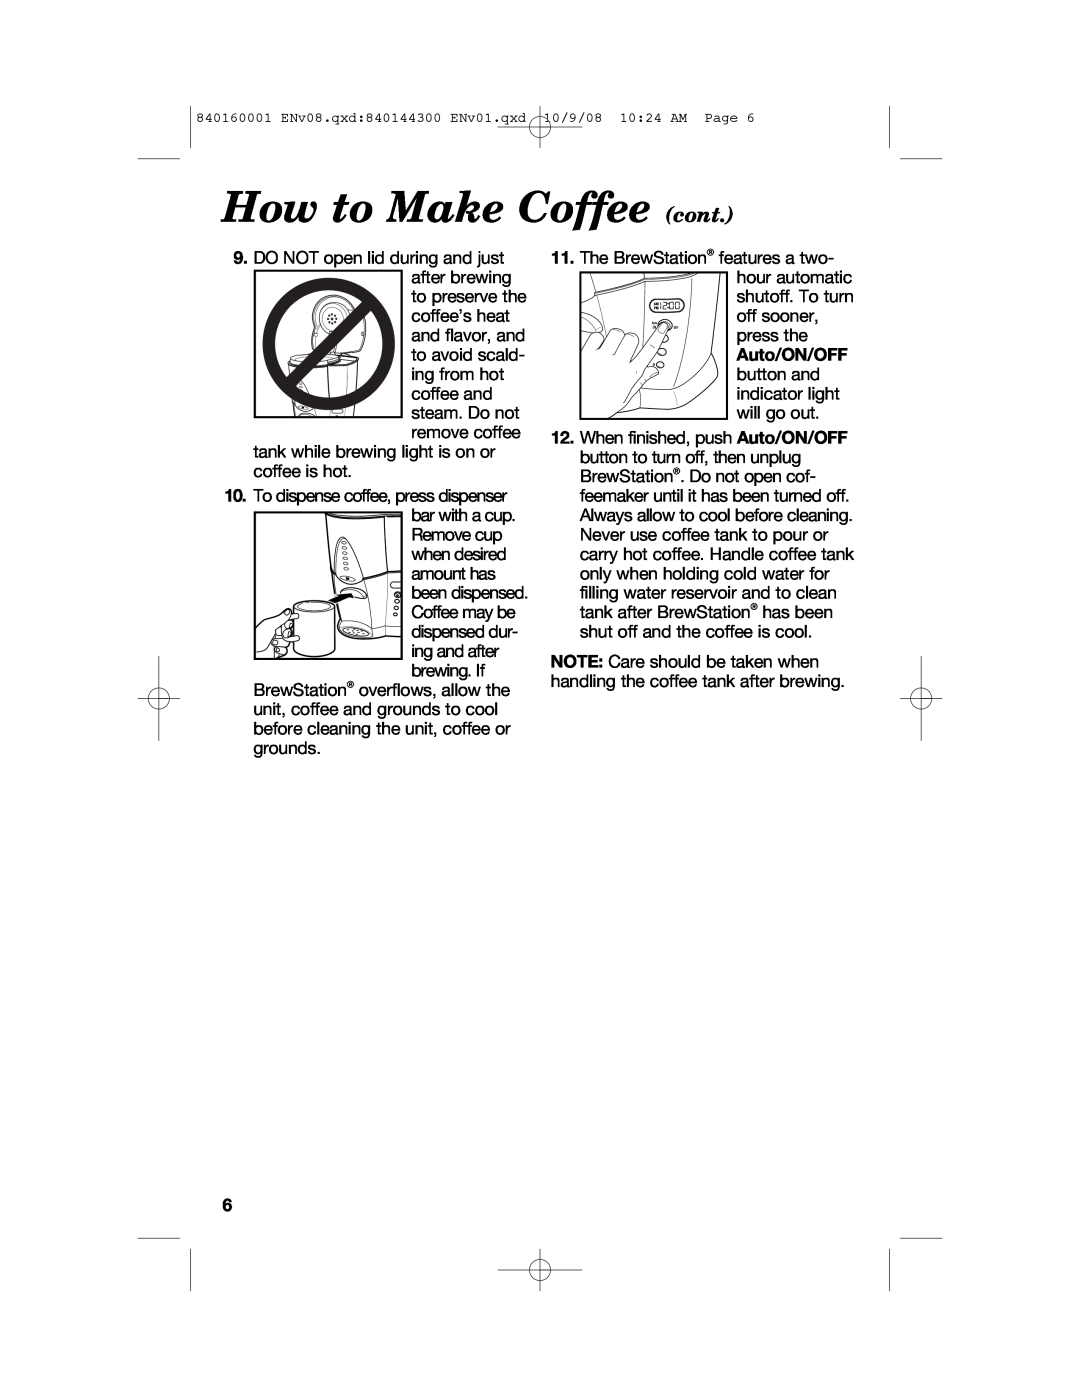 Hamilton Beach 47214 manual How to Make Coffee cont 